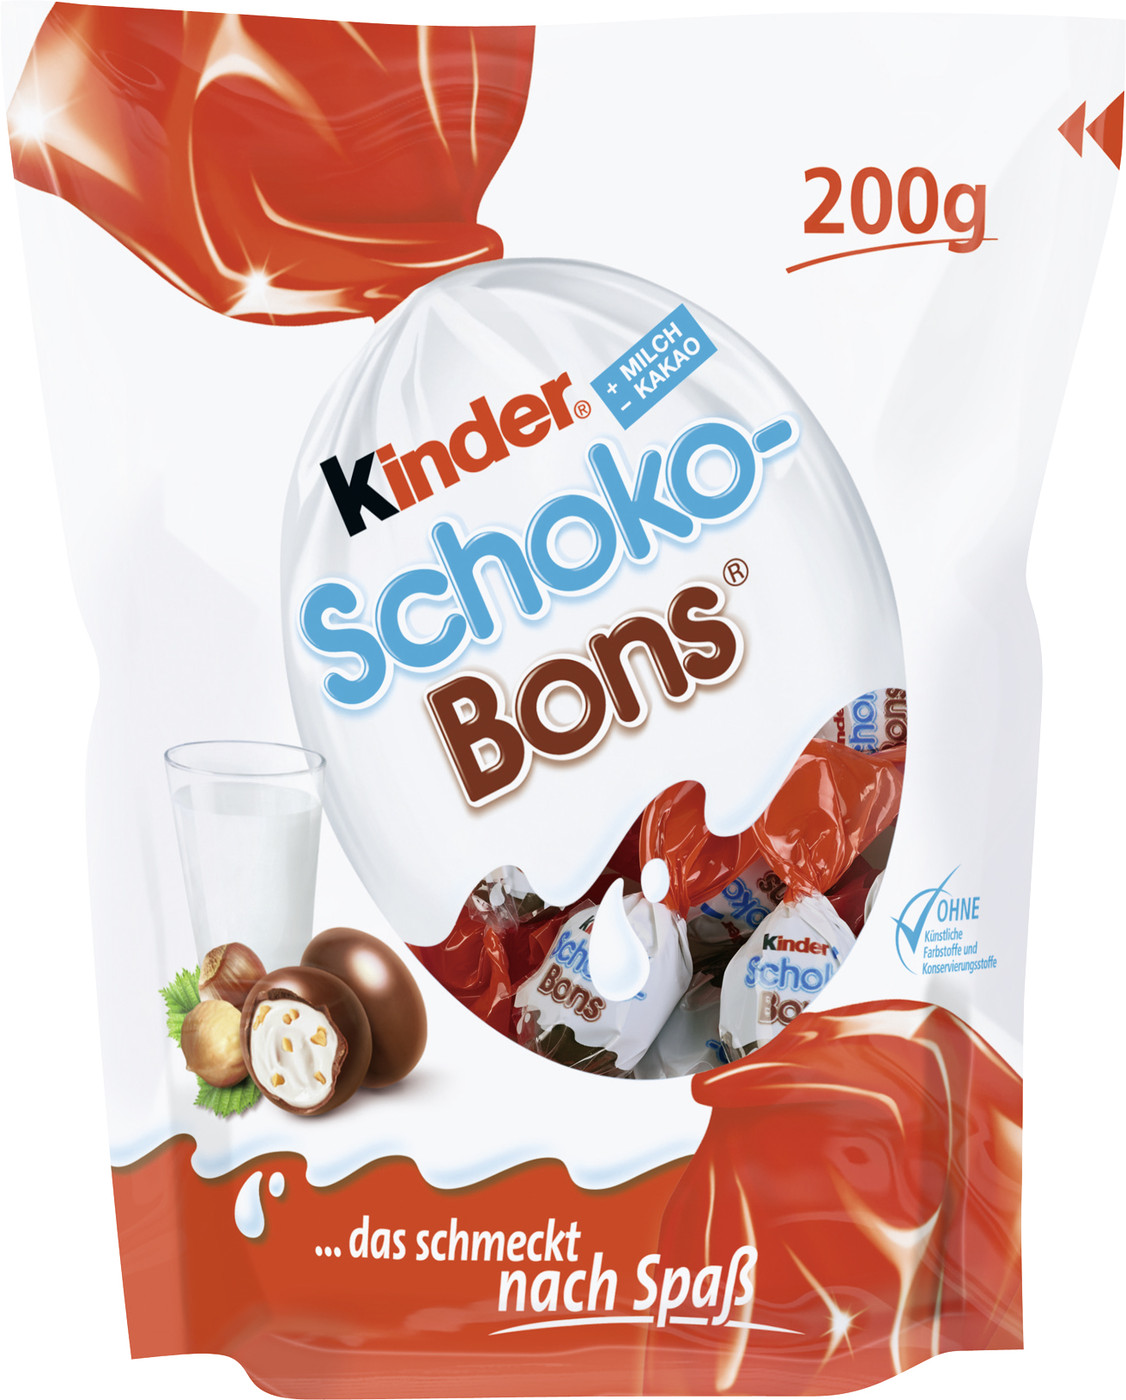 Kinder Schoko-Bons 200G